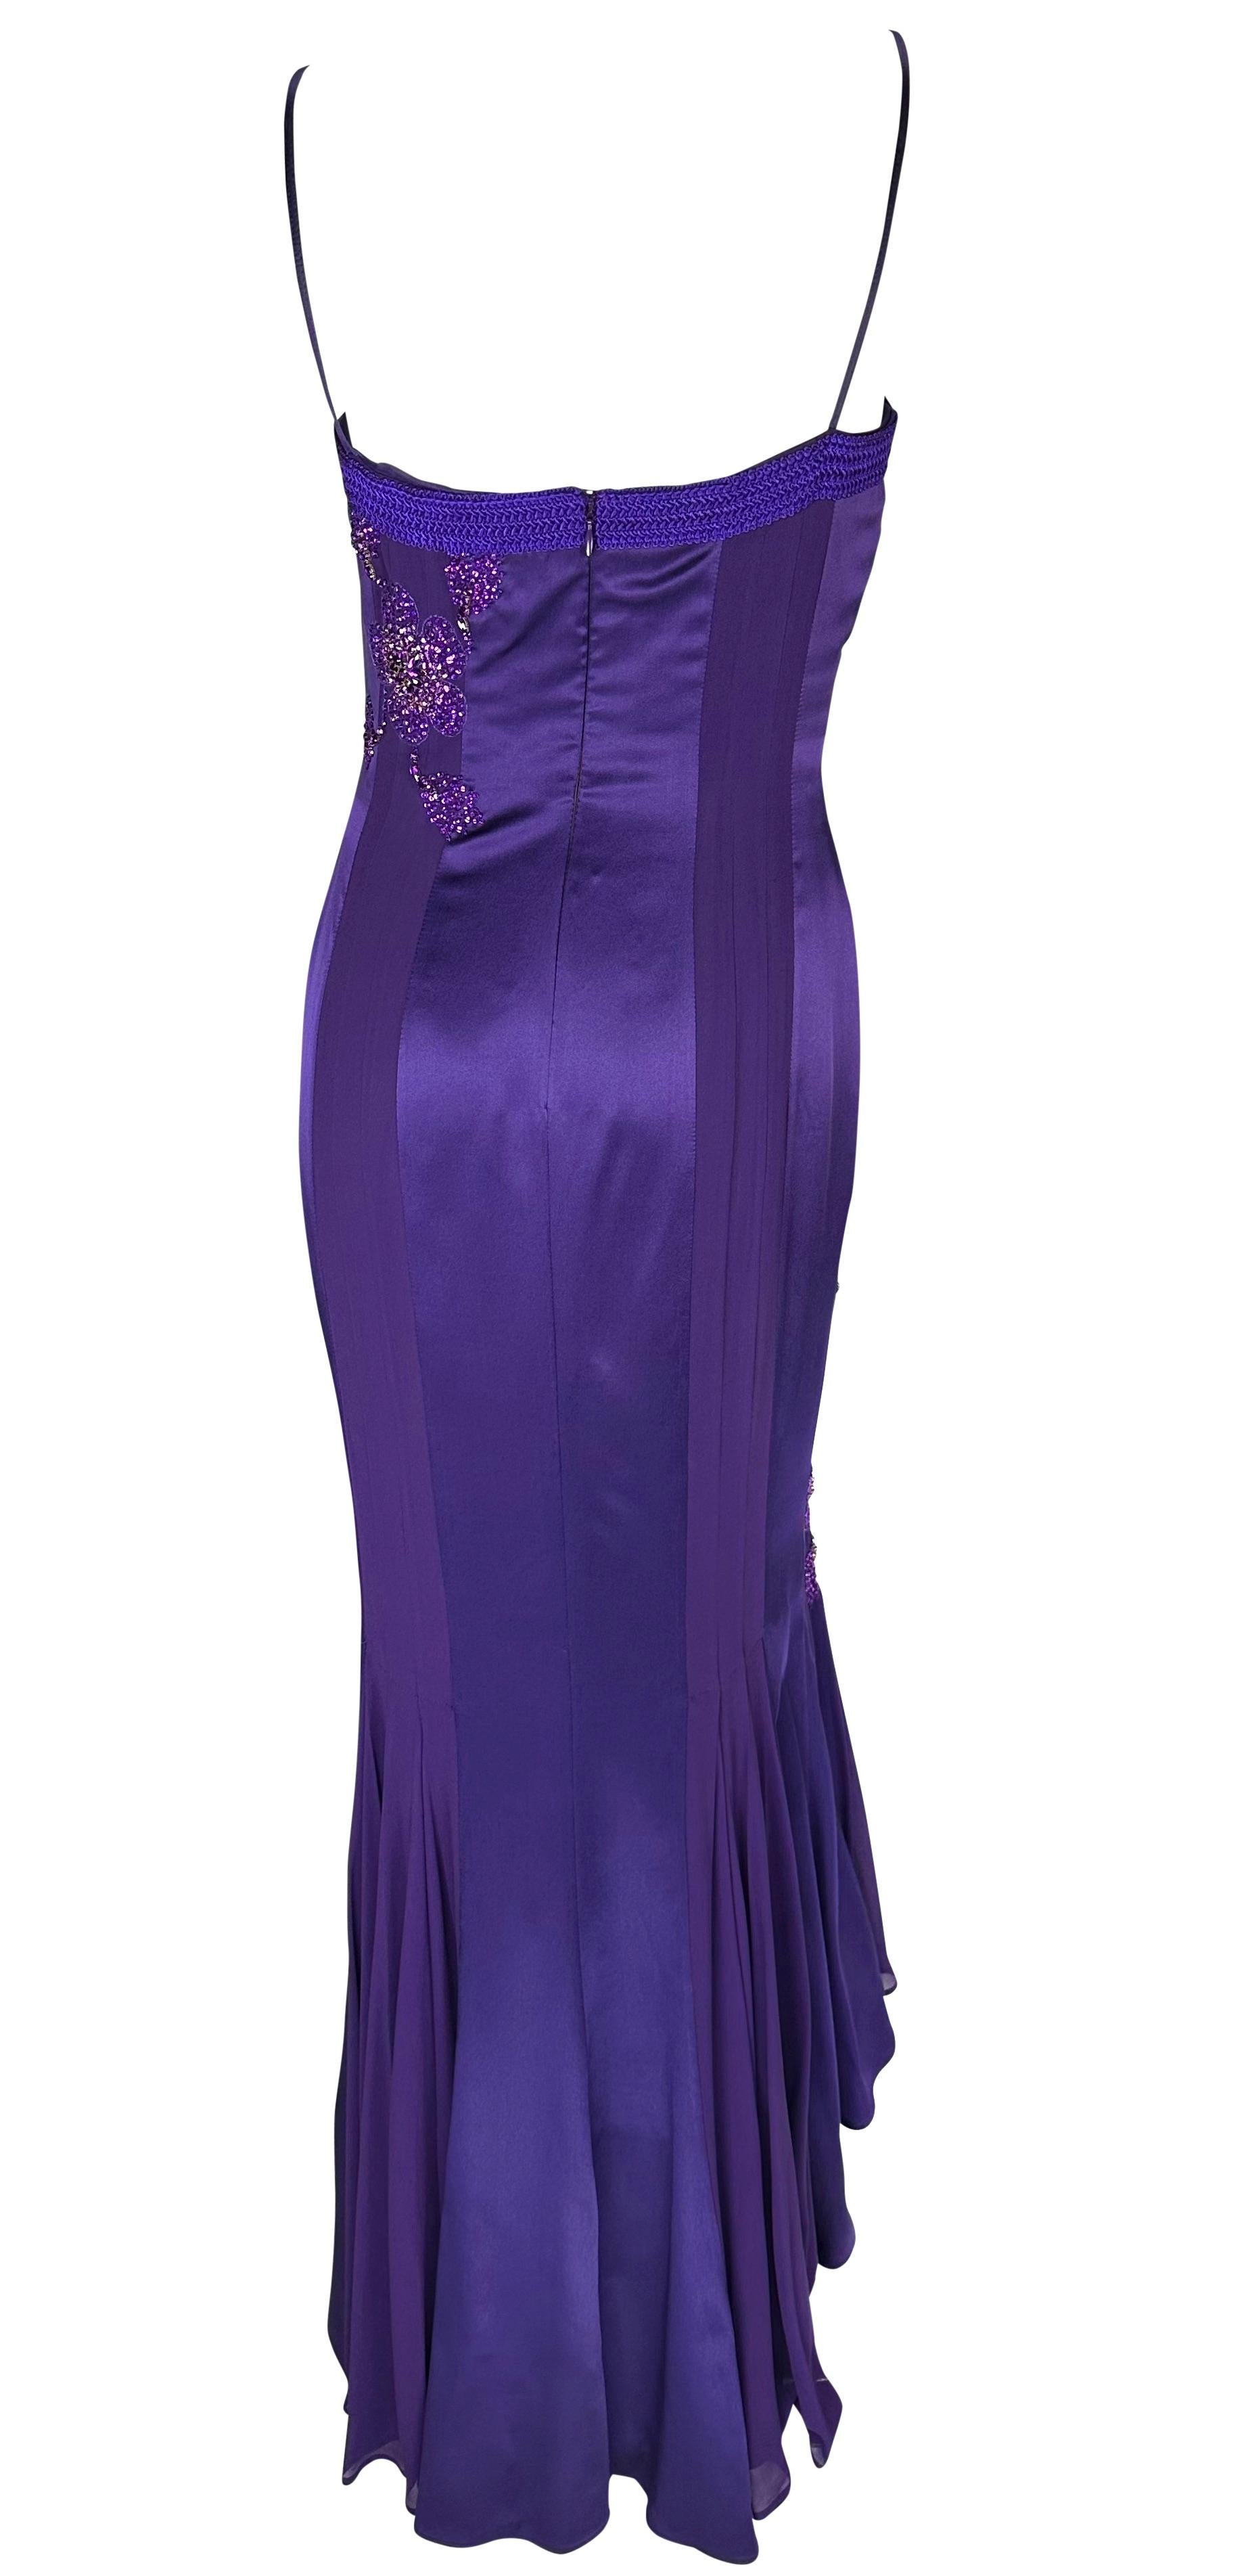 S/S 2005 Emanuel Ungaro by Giambattista Valli Rhinestone Purple Lace-Up Gown For Sale 7